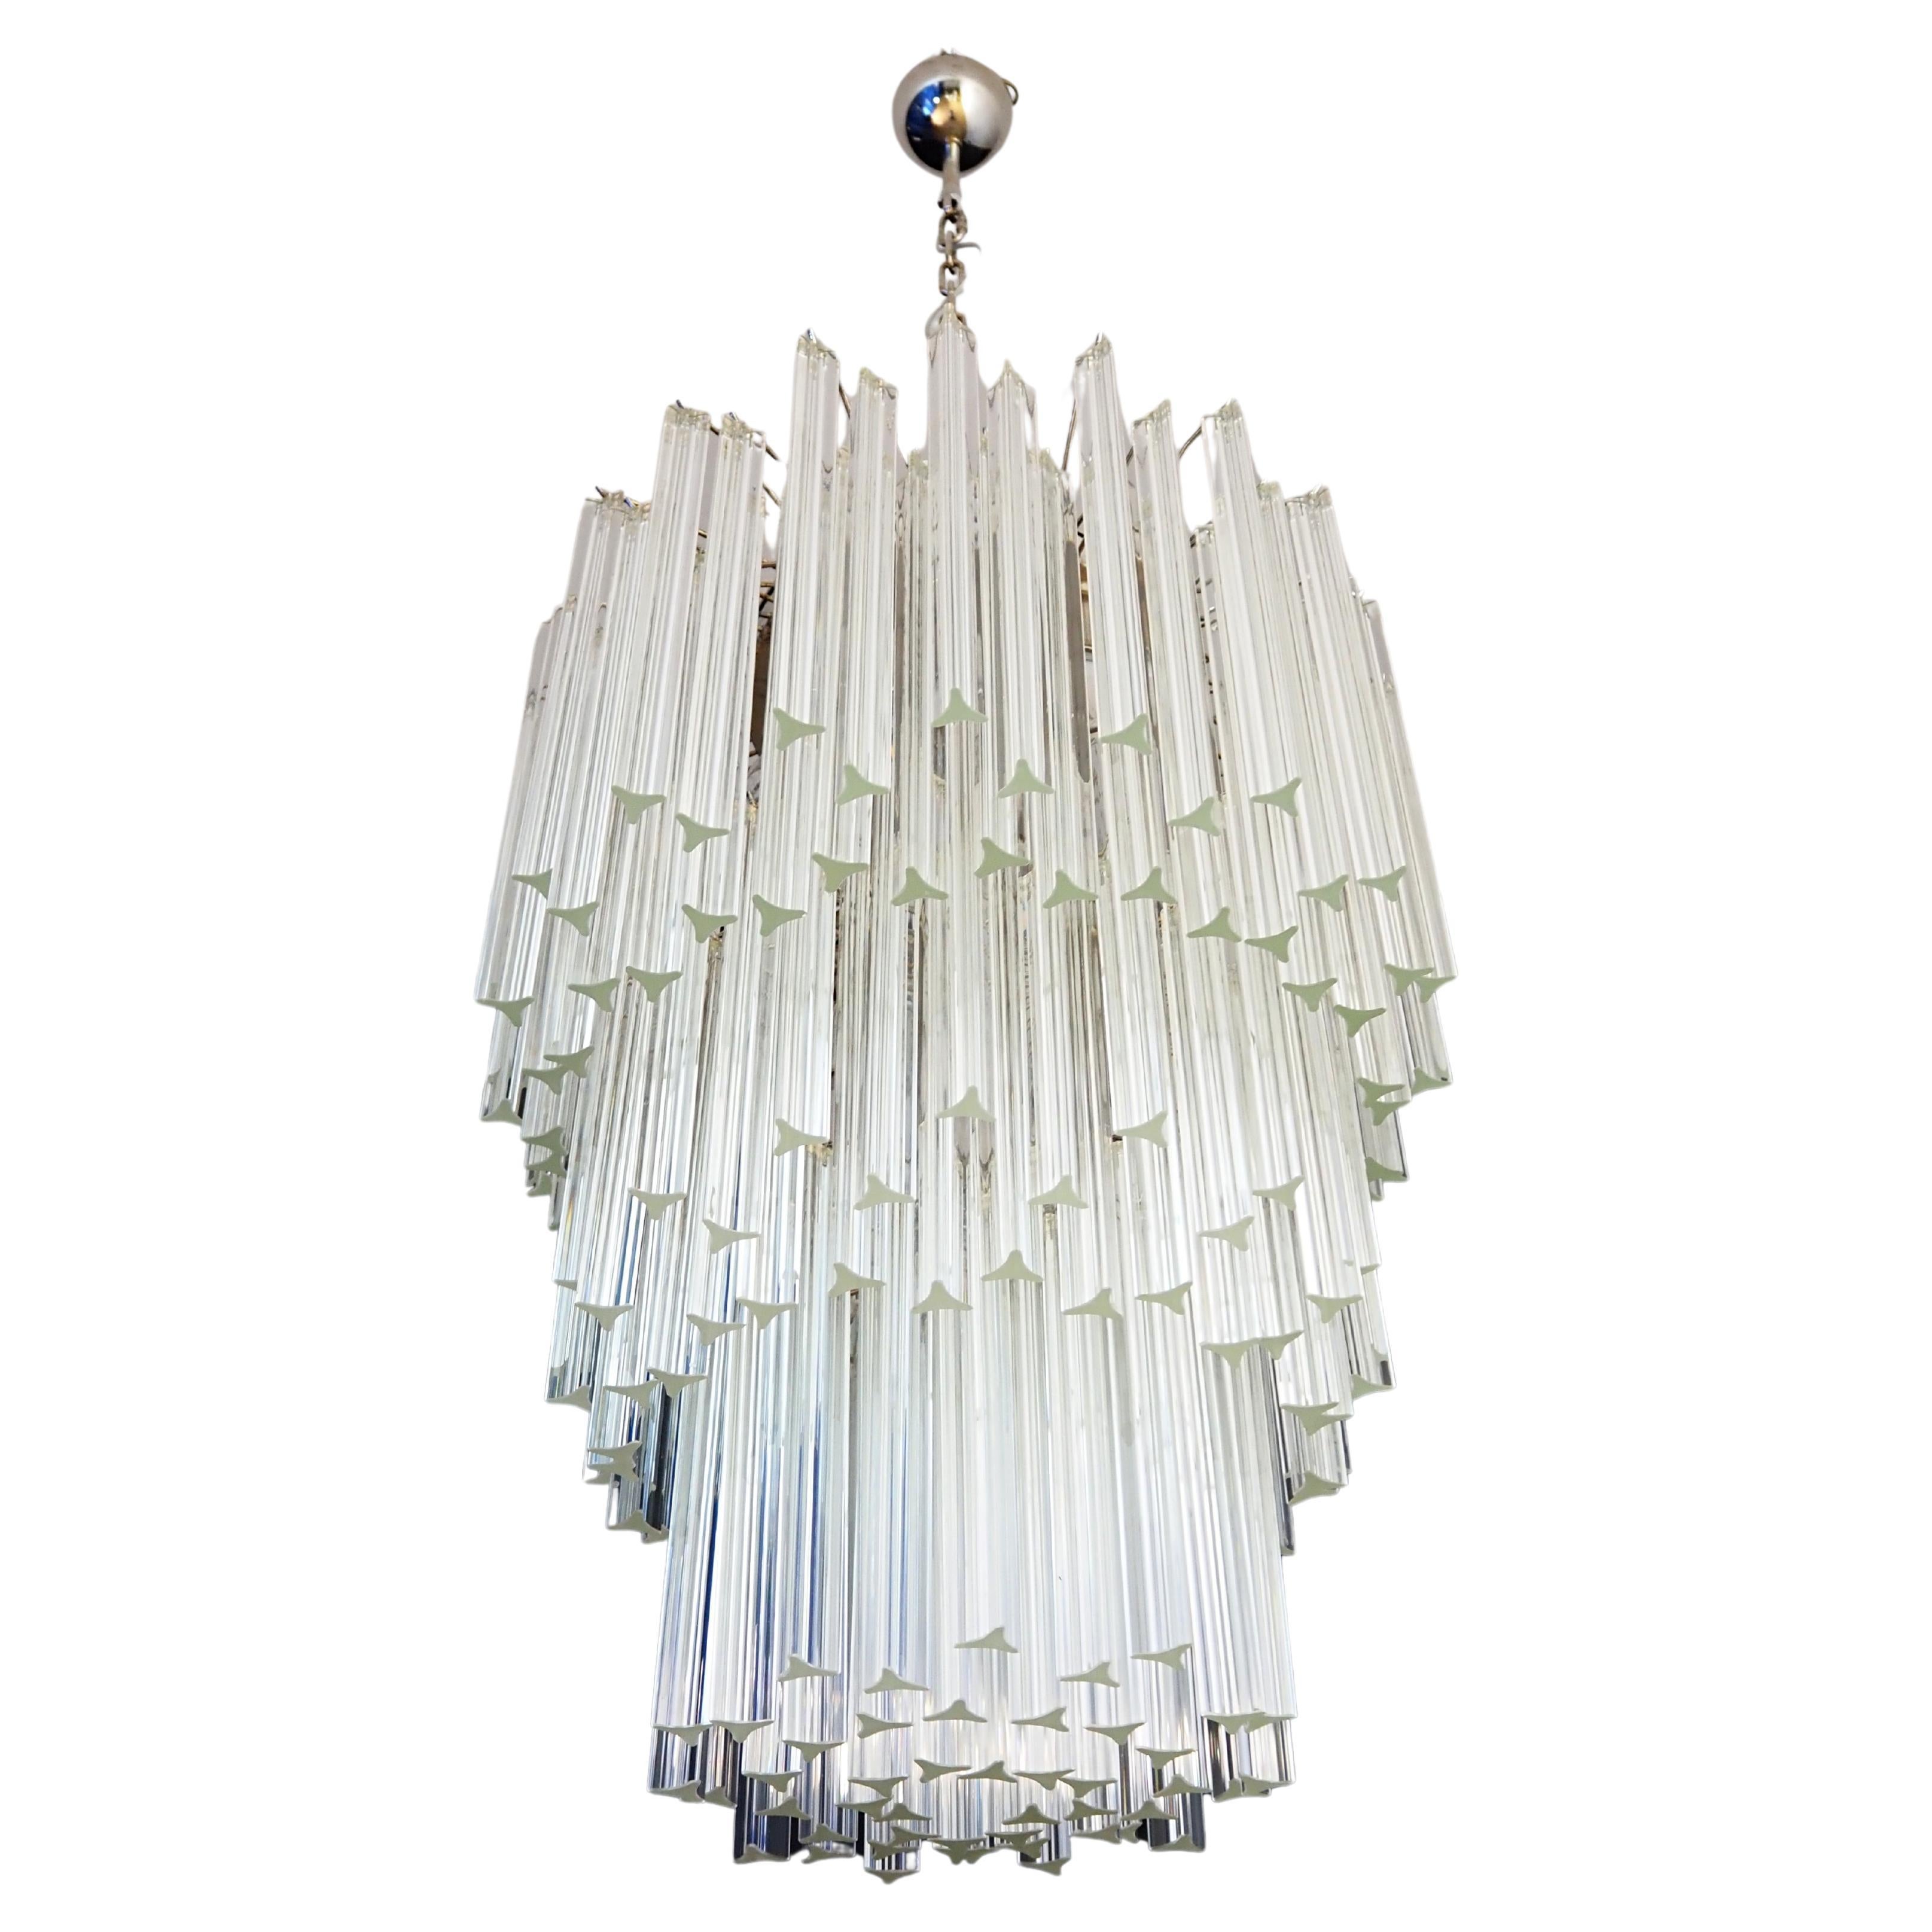 Huge Murano chandelier trasparent triedri – 187 prism - Mariangela model